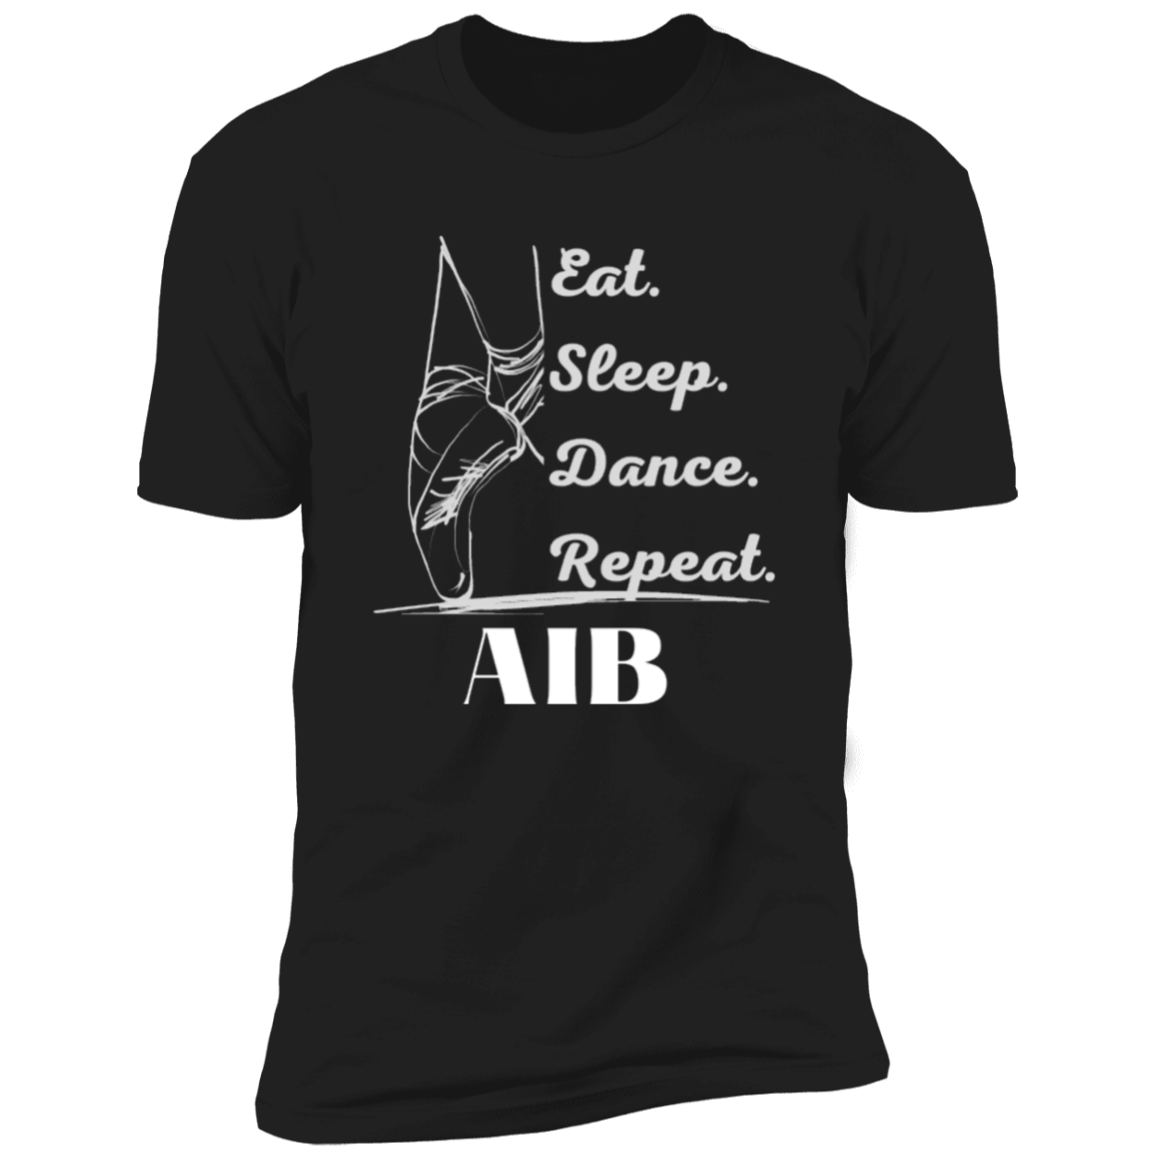 Eat. Sleep. Dance. Repeat. Men's Short Sleeve T-Shirt